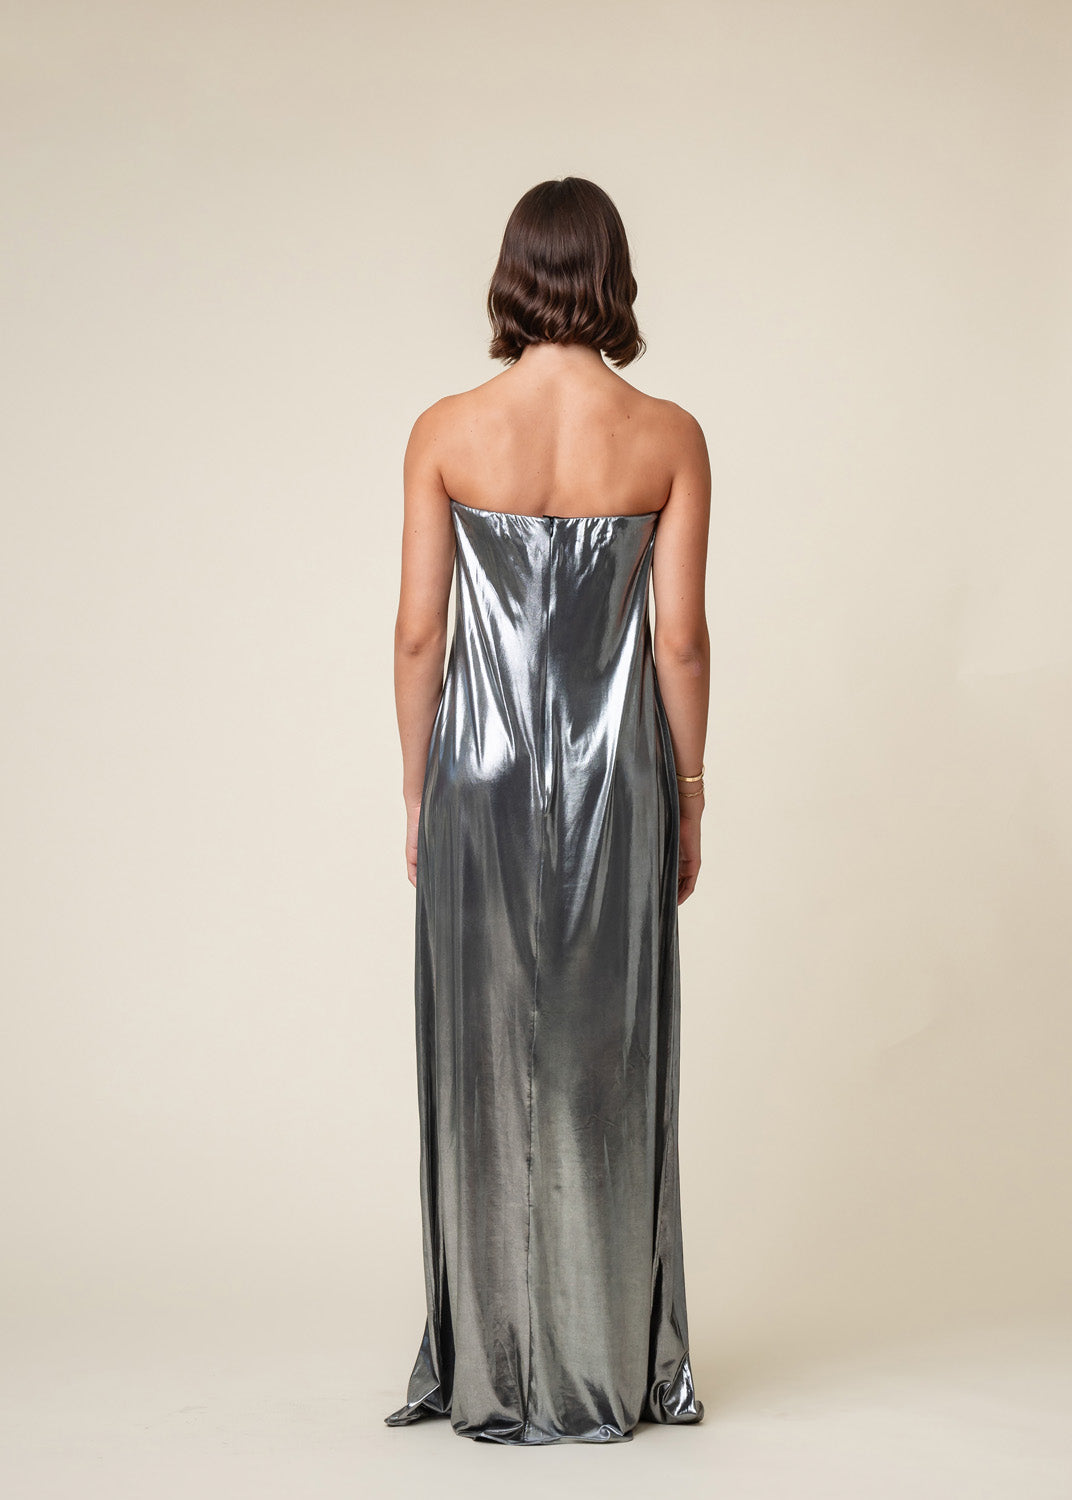 Dress 17 Silver